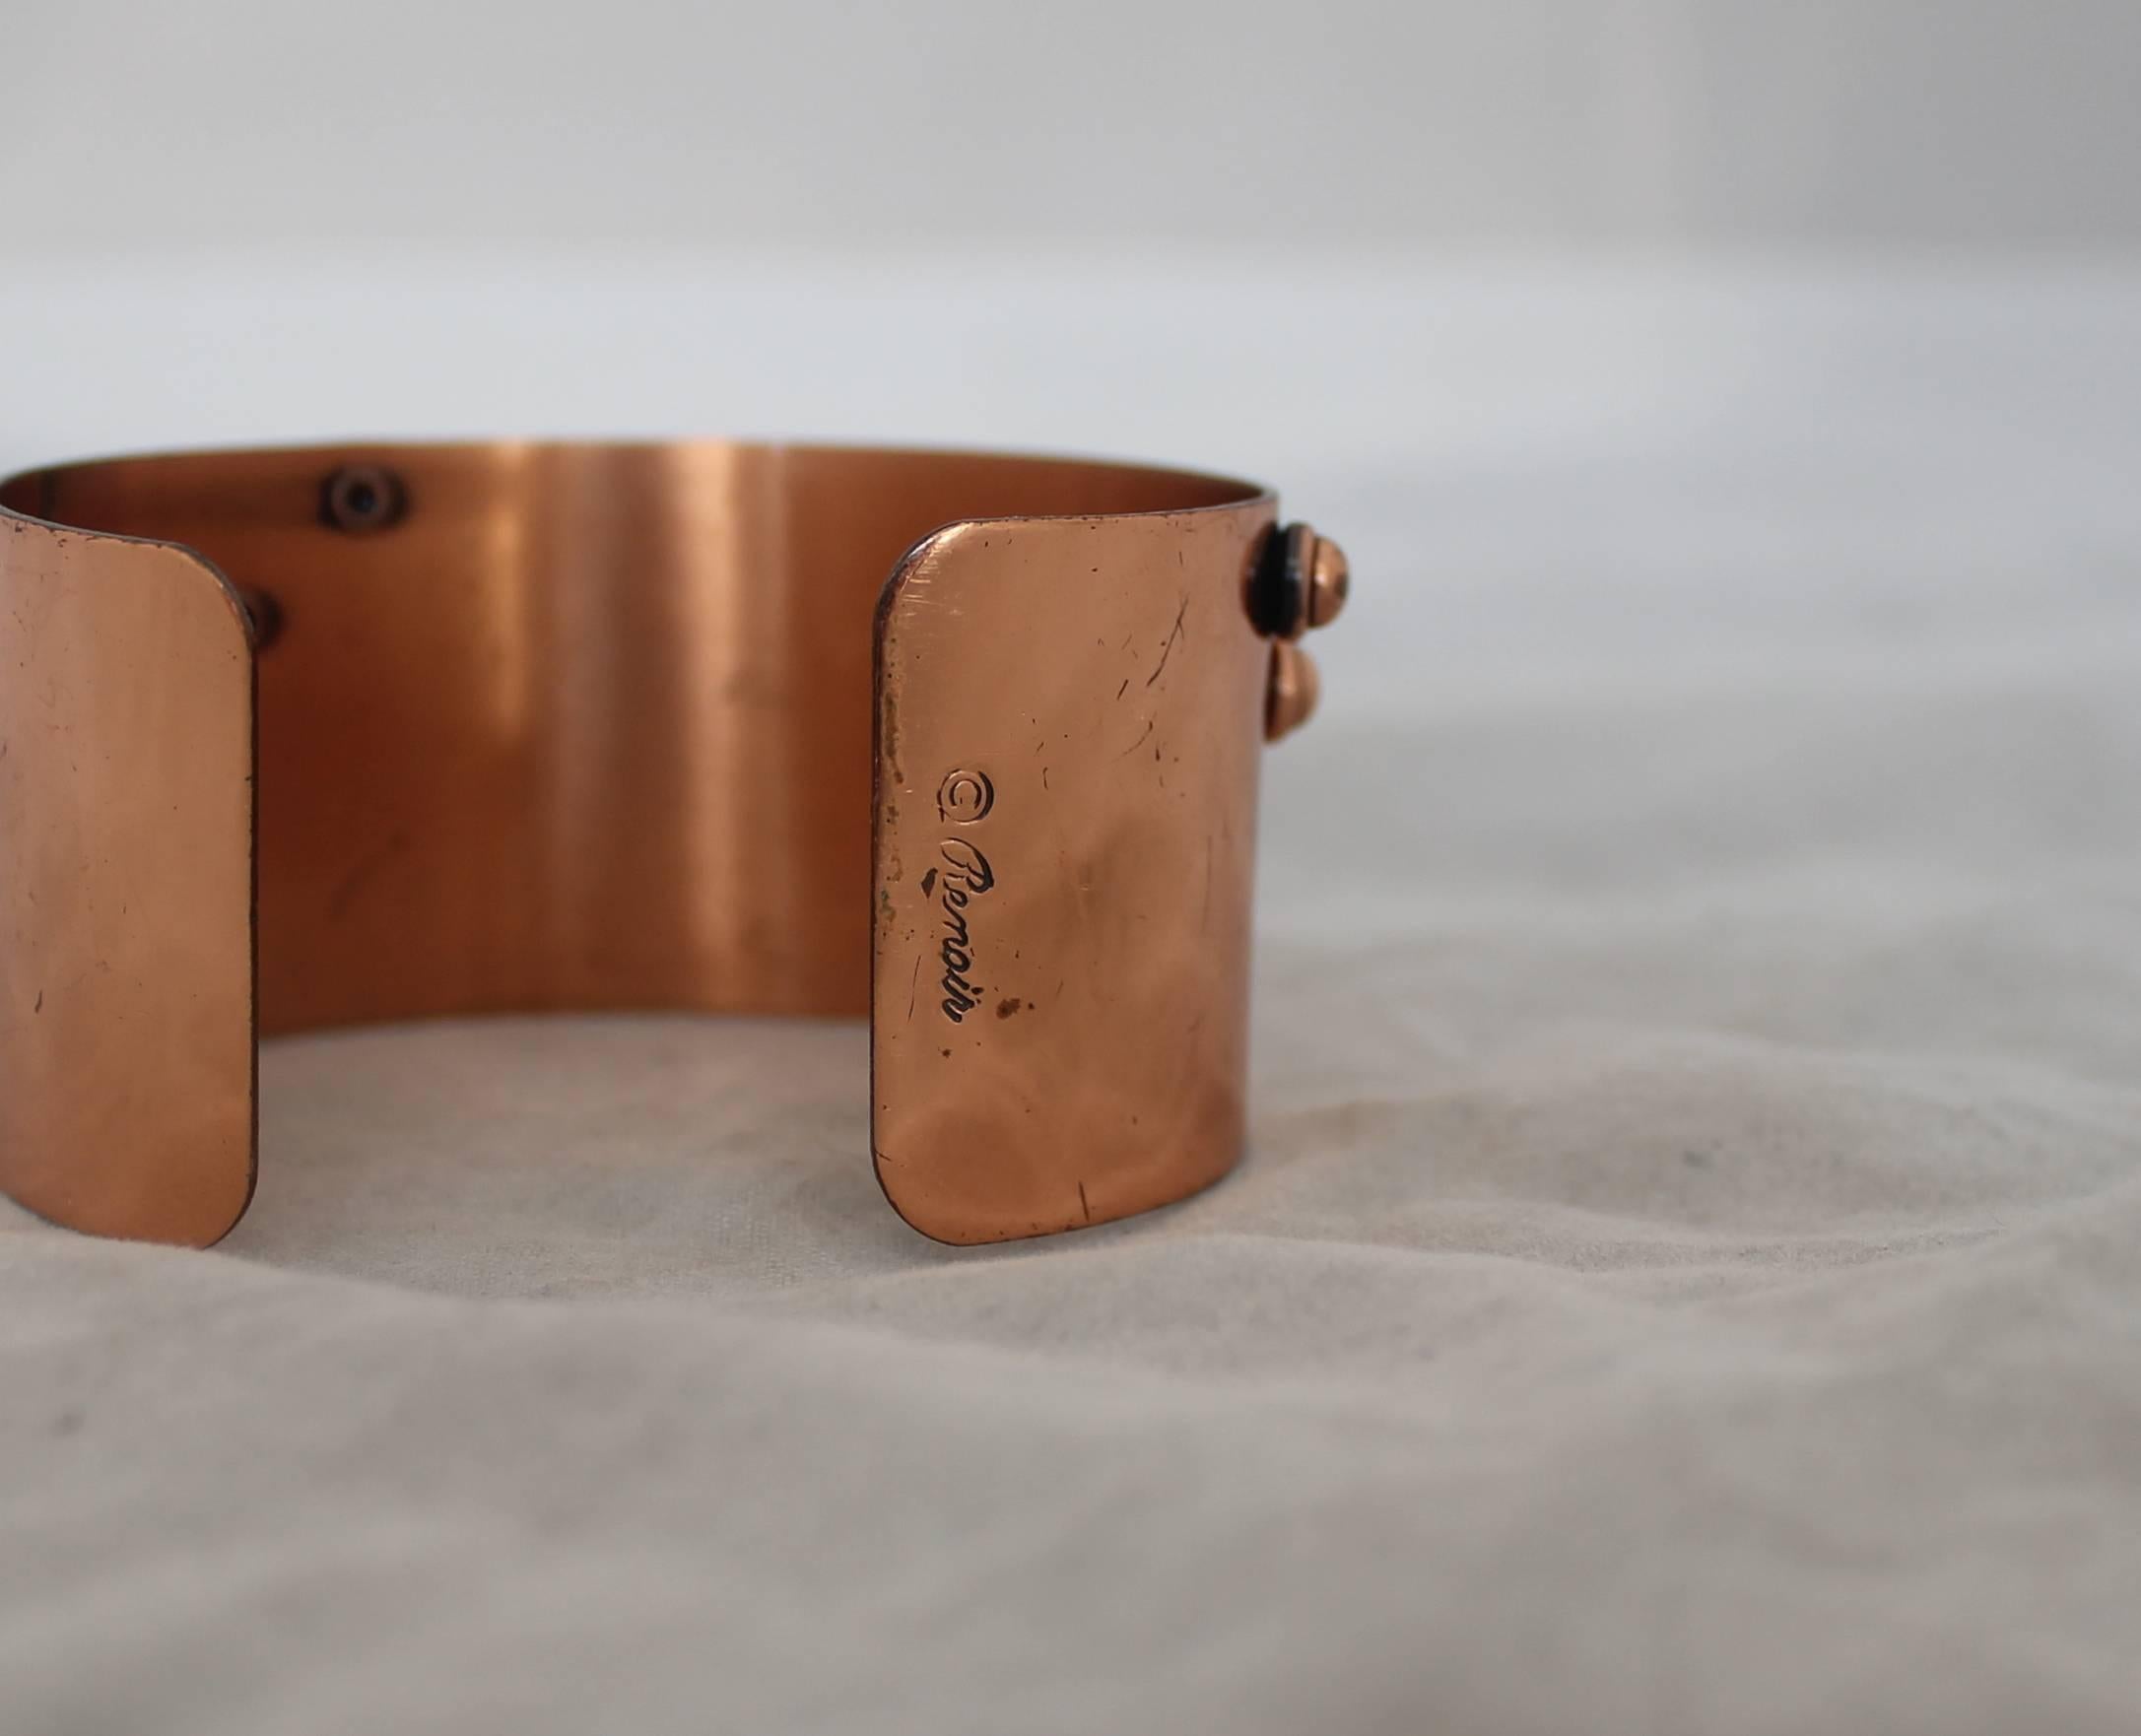 renoir copper cuff bracelet